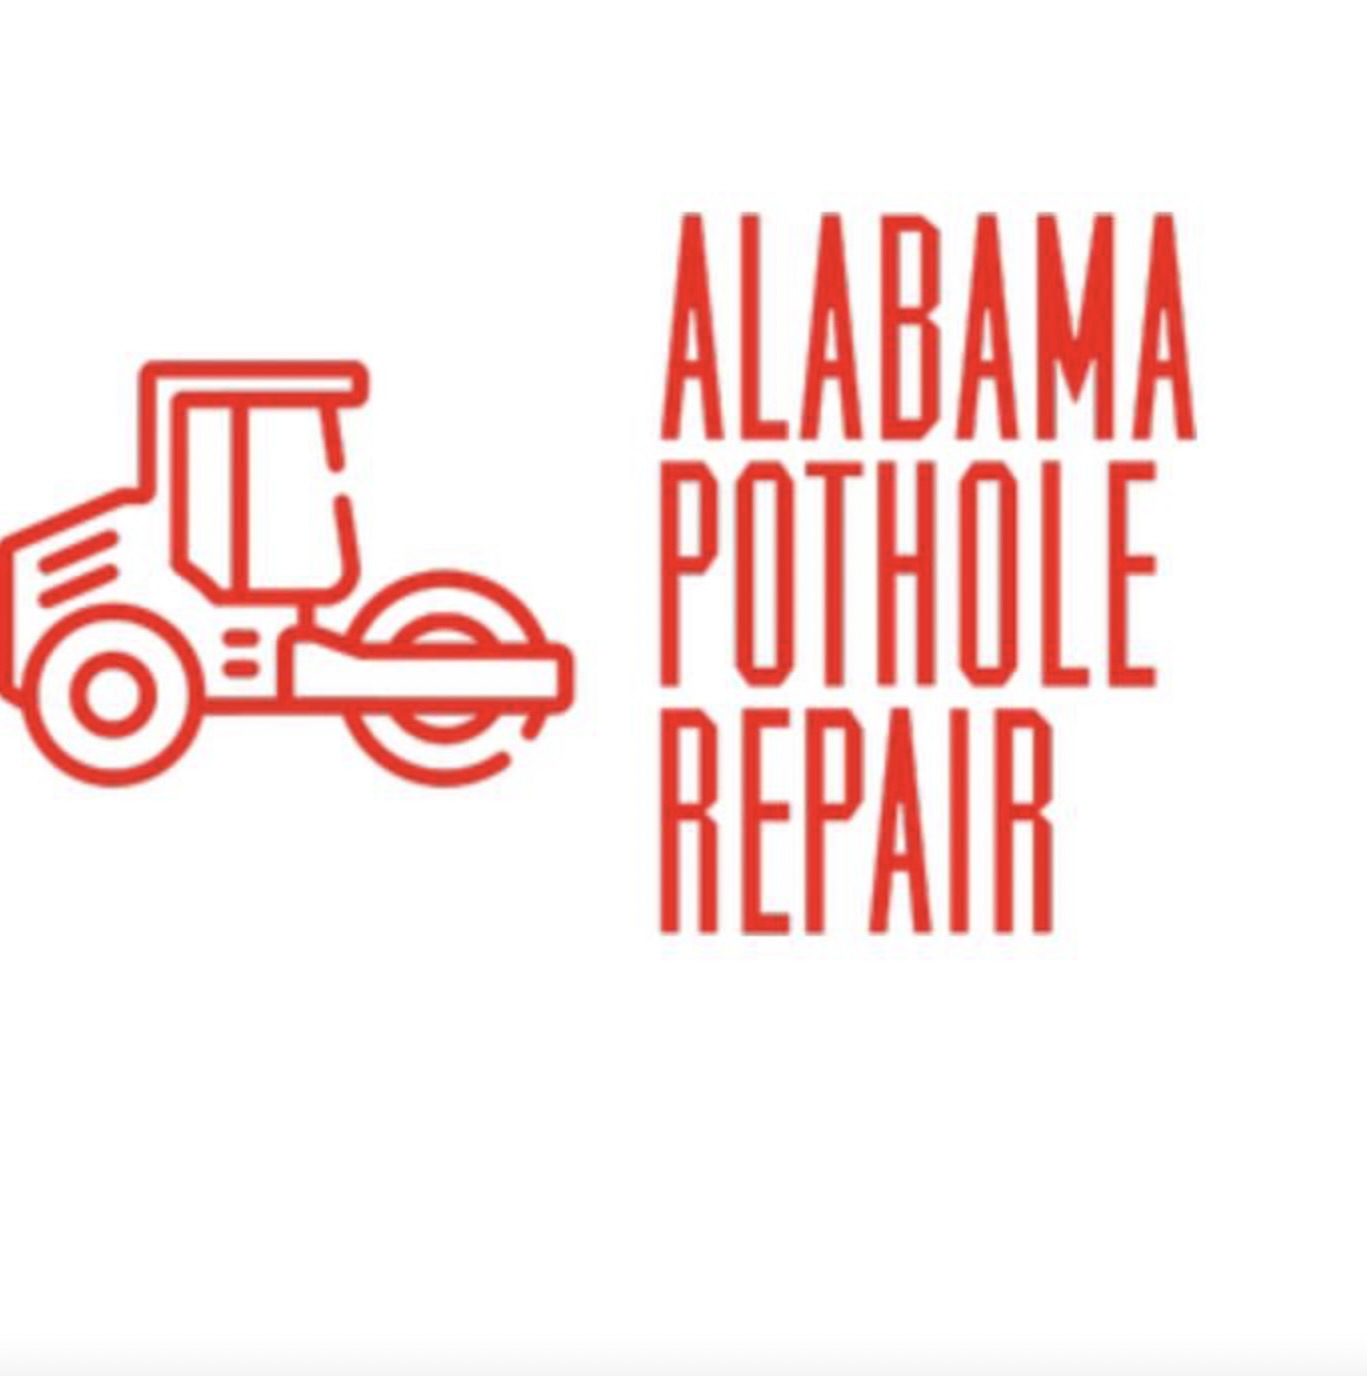 Alabama Pothole Repair Logo